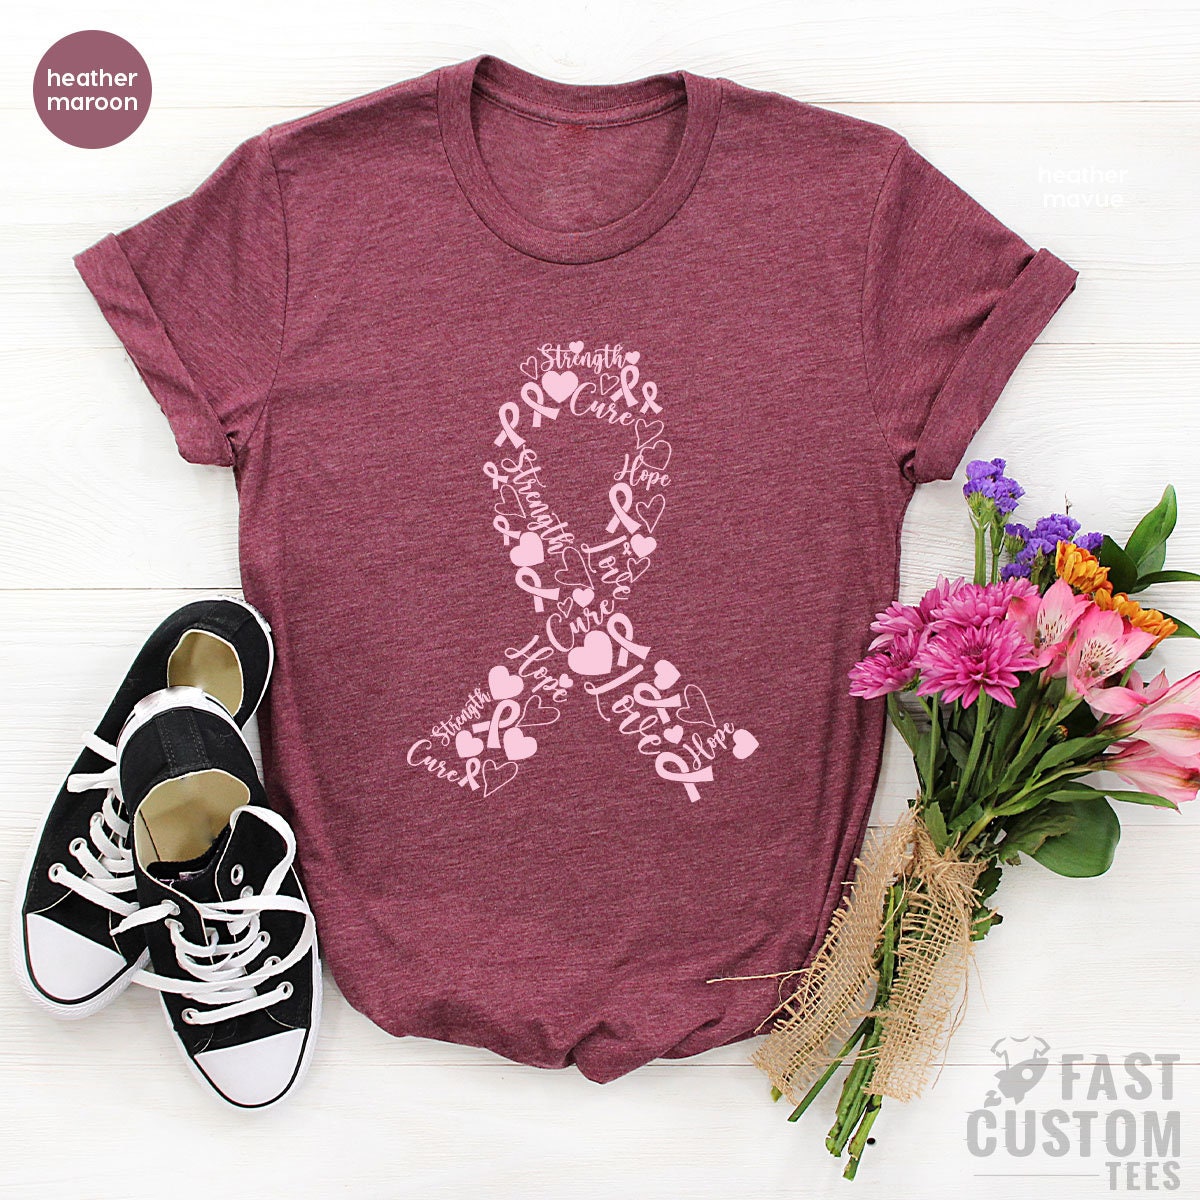 Cancer T Shirt, Cancer Warrior T-Shirt, Breast Cancer Shirt, Stronger Than Cancer, Cancer Survivor T-Shirt, Cancer Tee, Cancer Awareness Tee - Fastdeliverytees.com